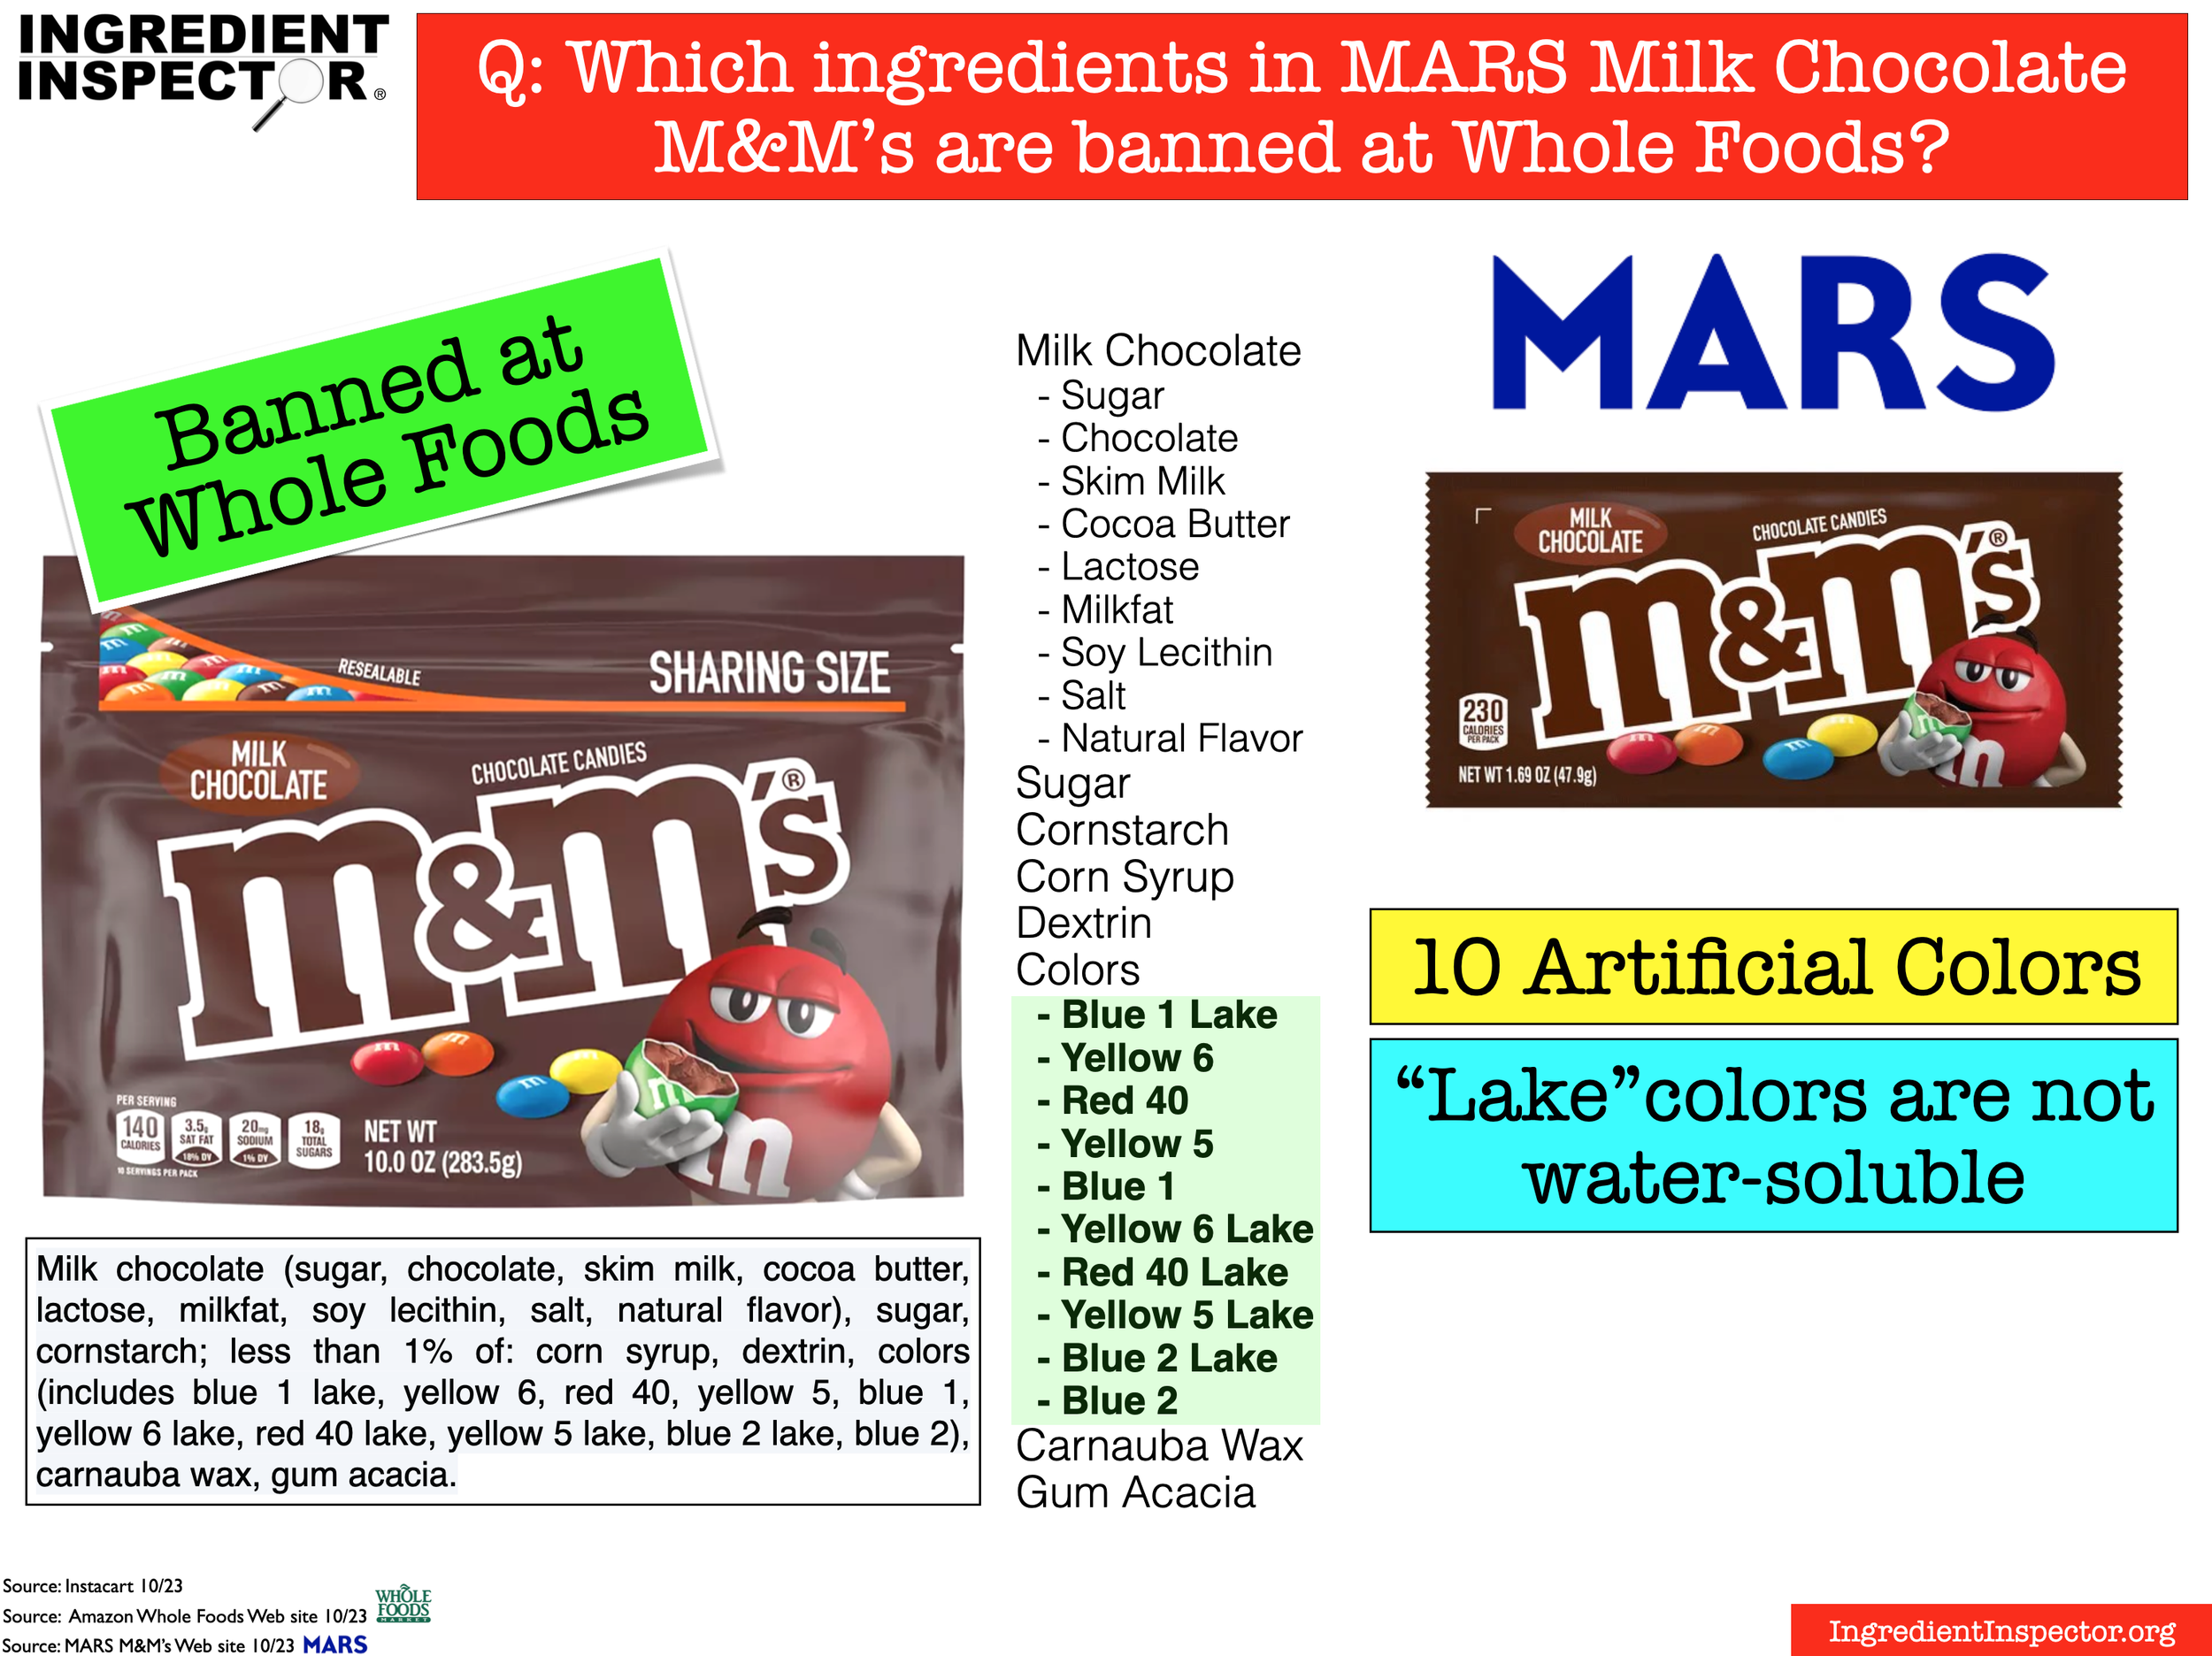 Milk Chocolate M&M'S, 10.0oz